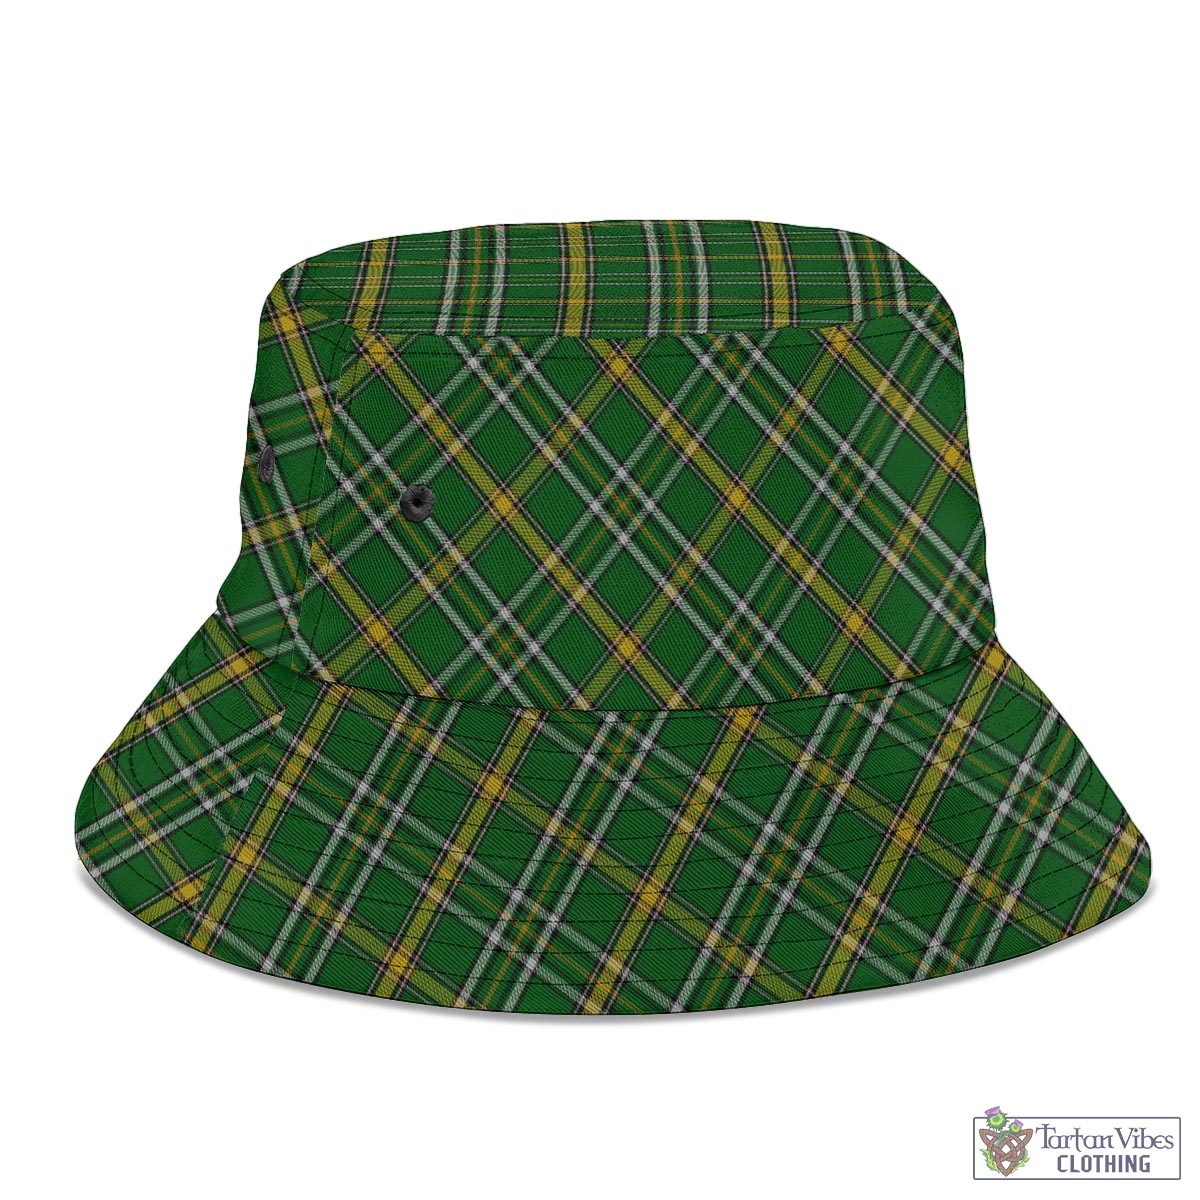 Tartan Vibes Clothing Offaly County Ireland Tartan Bucket Hat